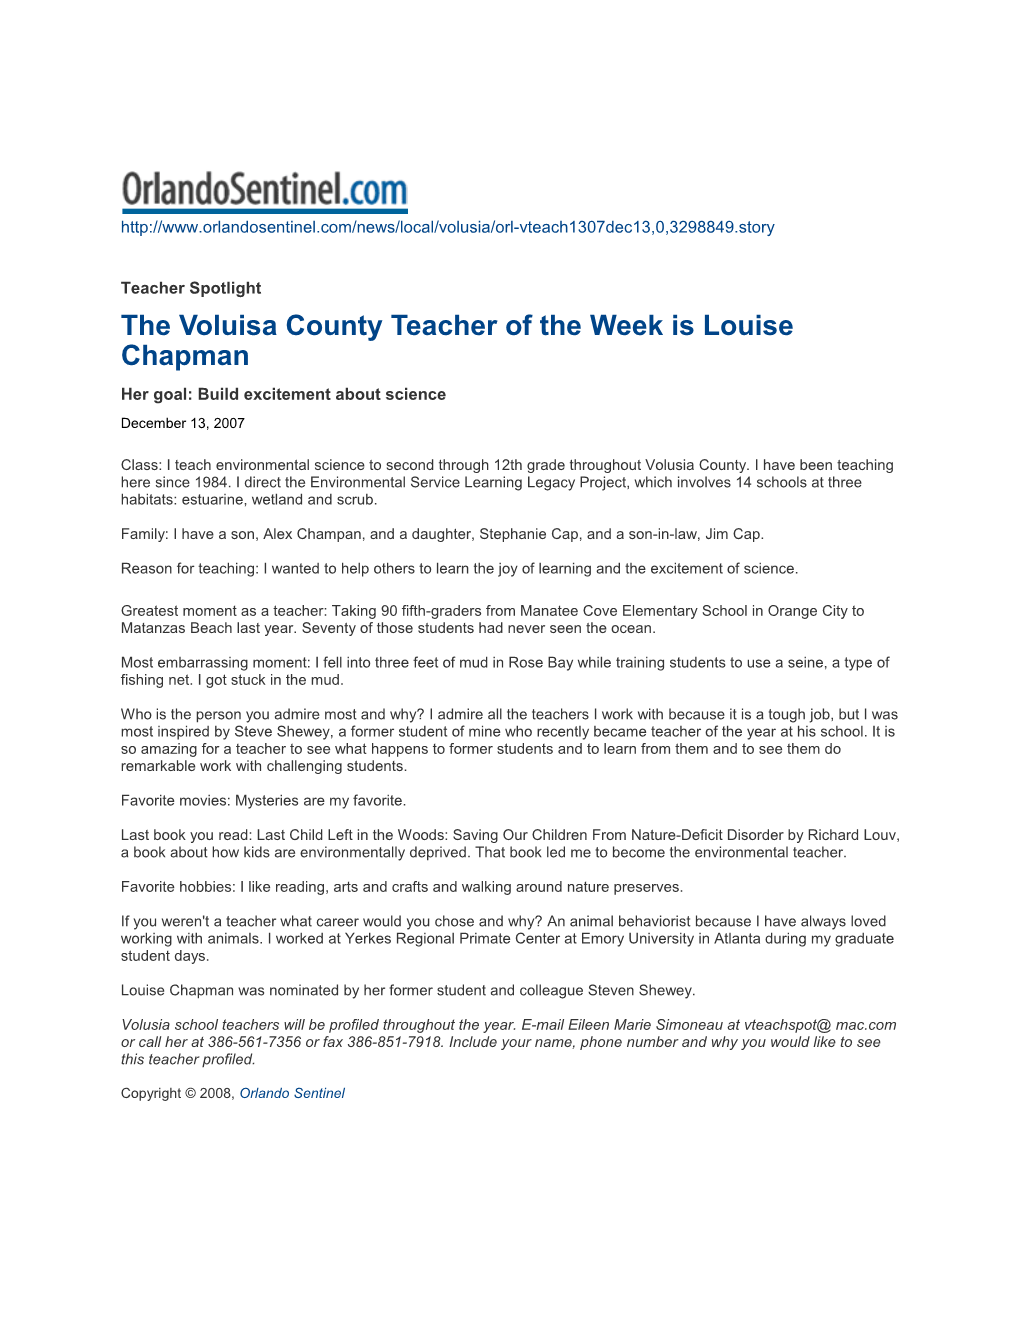 The Voluisa County Teacher of the Week Is Louise Chapman